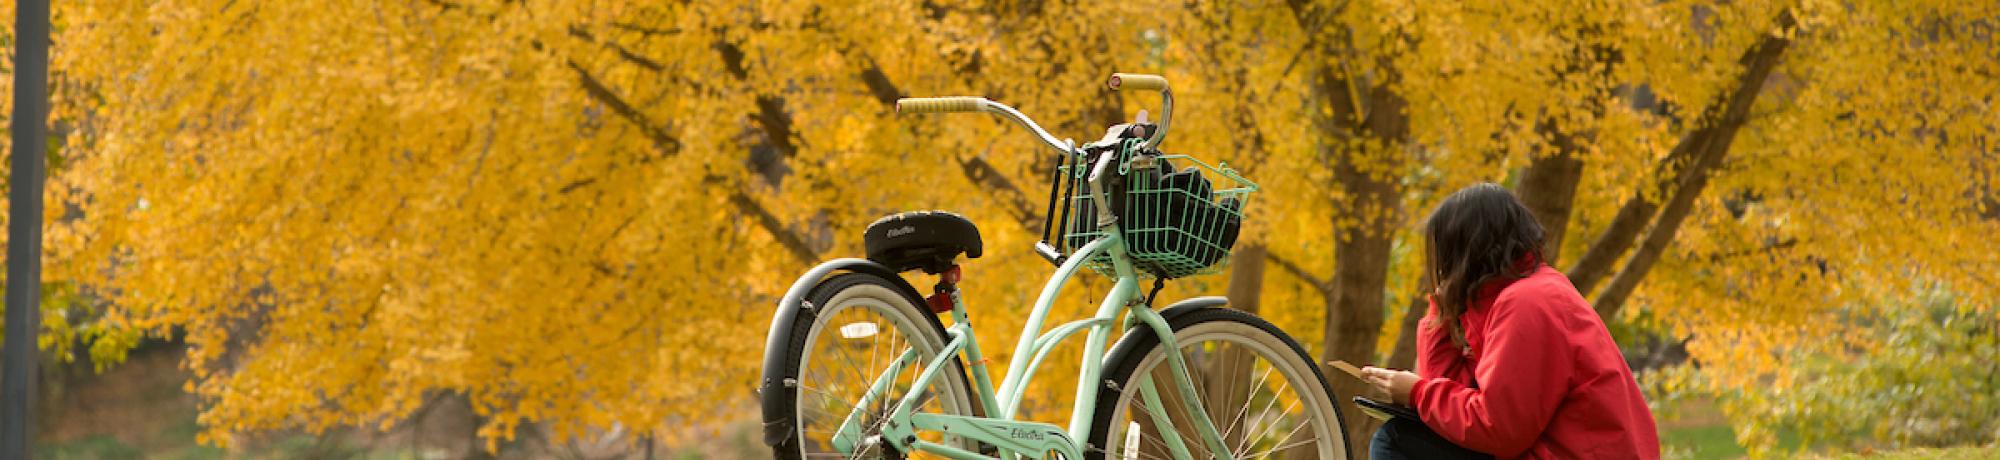 Bike with fall foliage